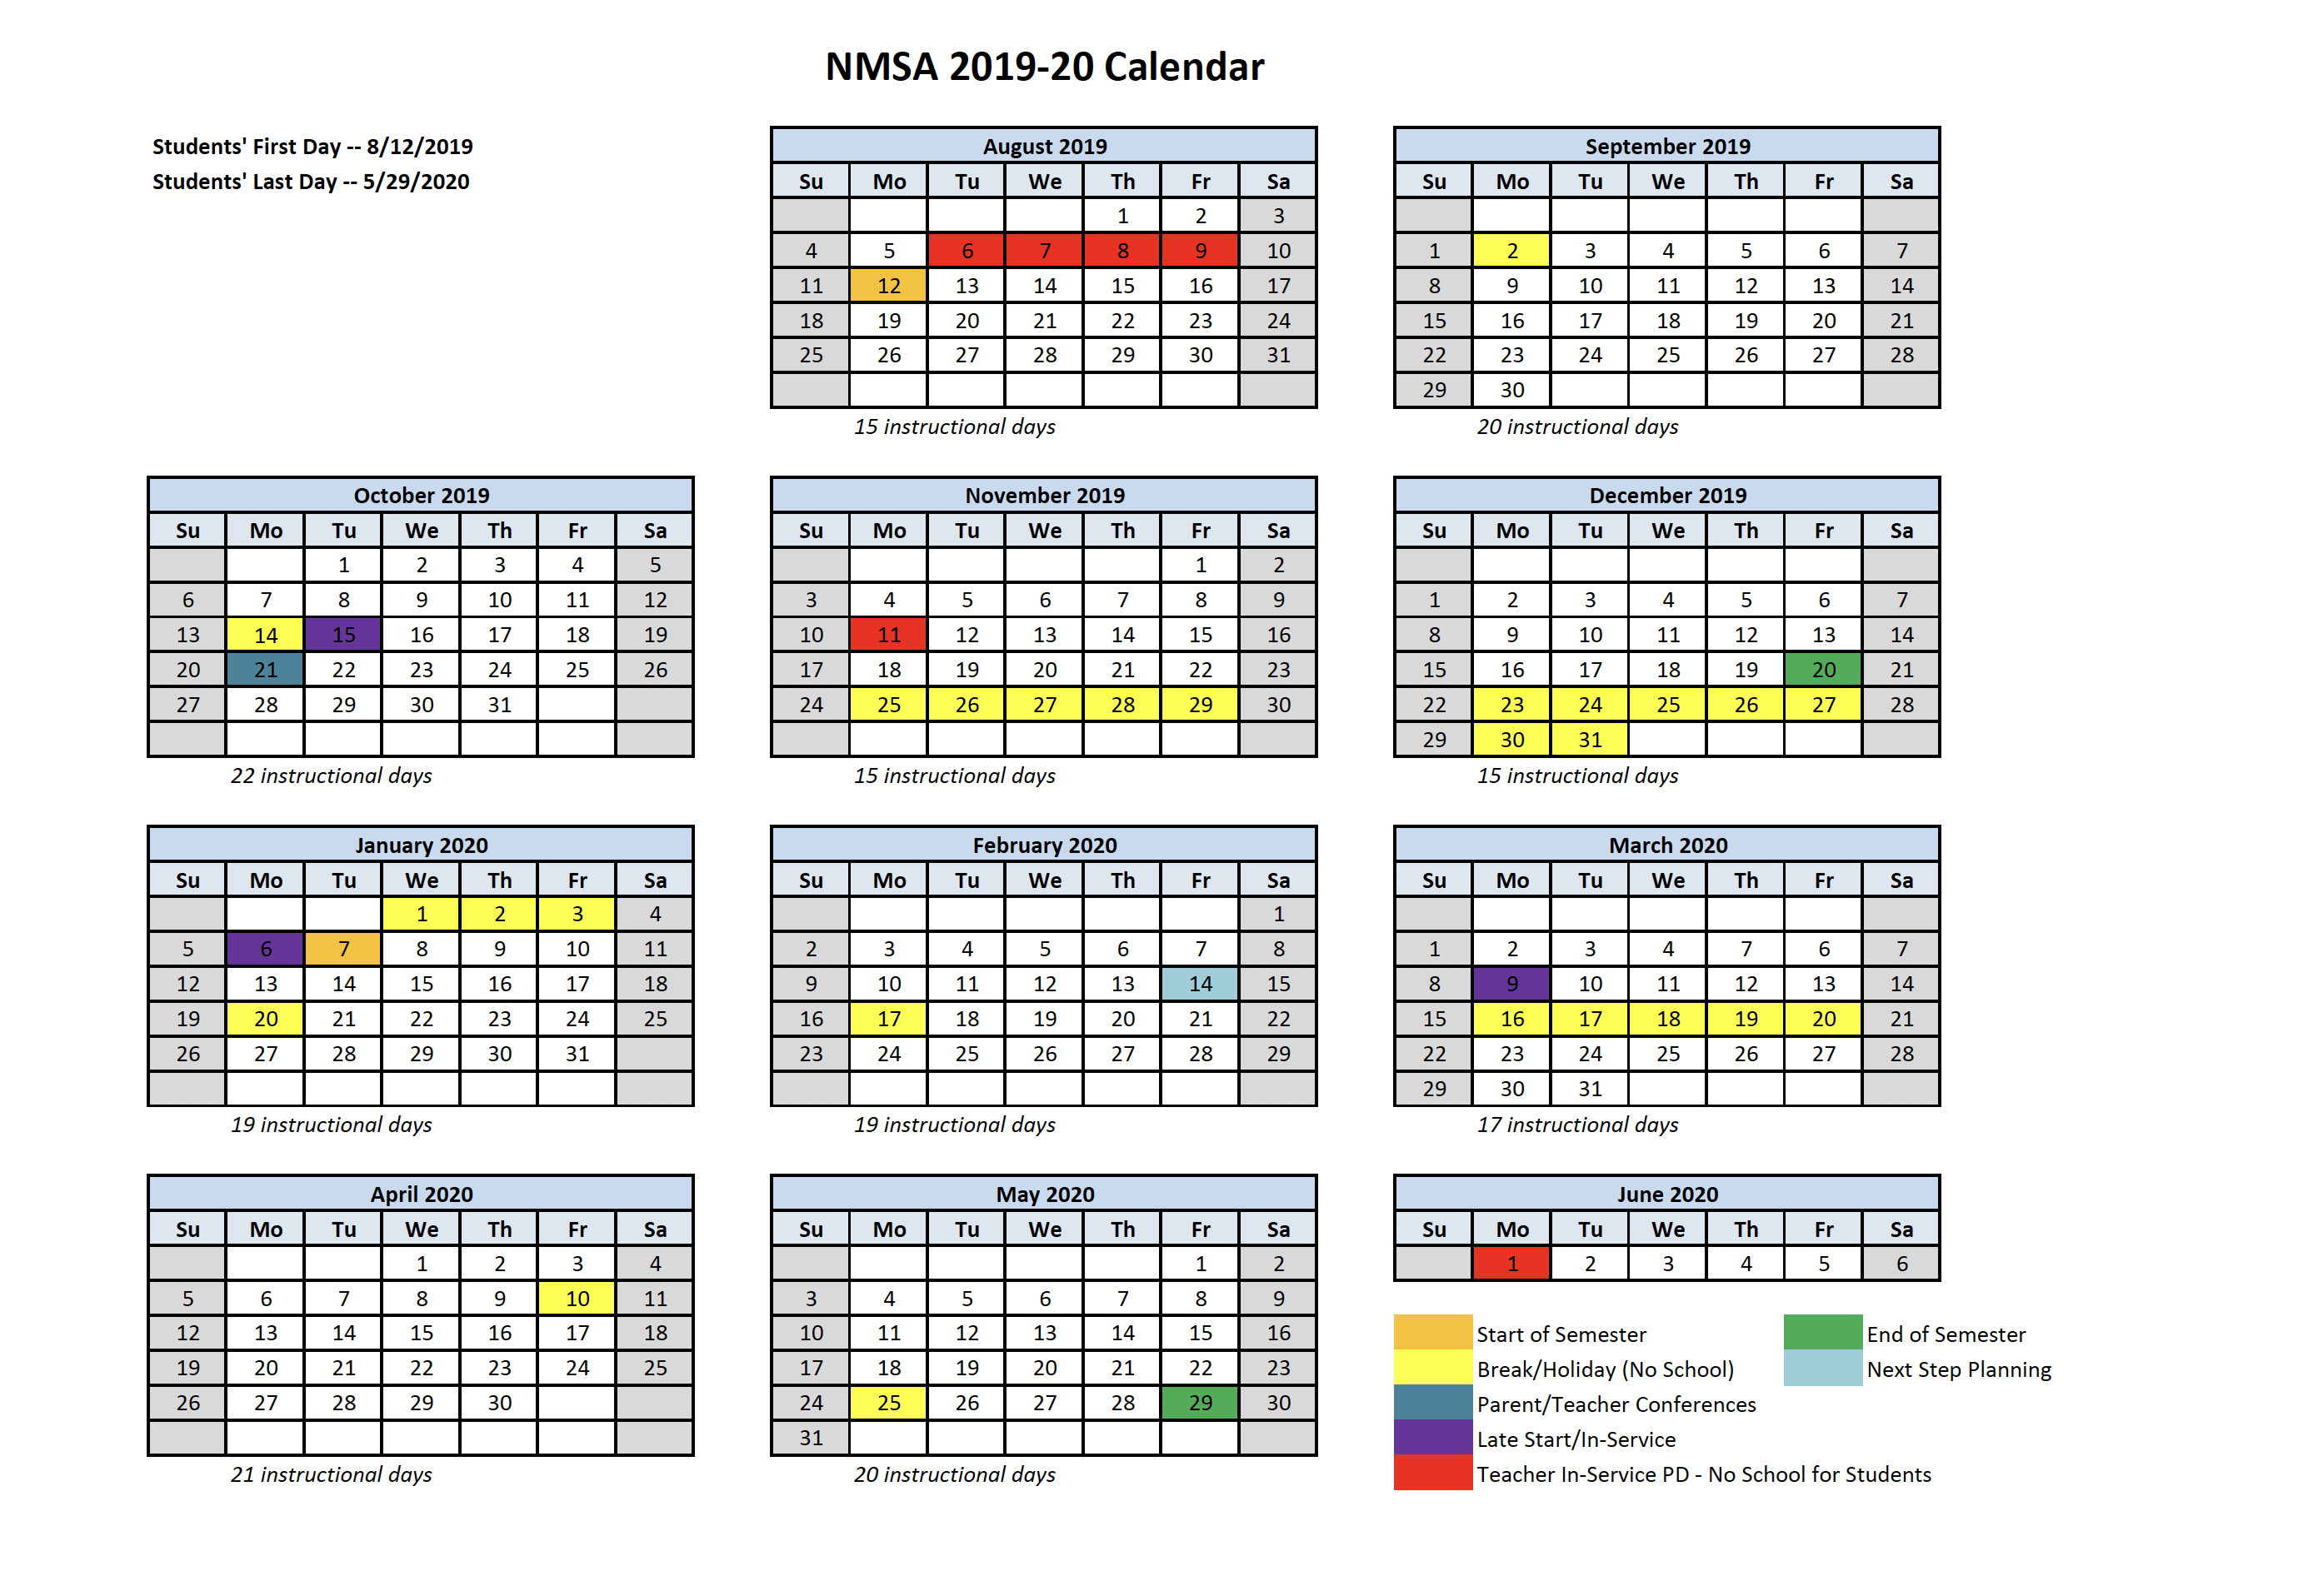 School Year Calendar - New Mexico School for the Arts